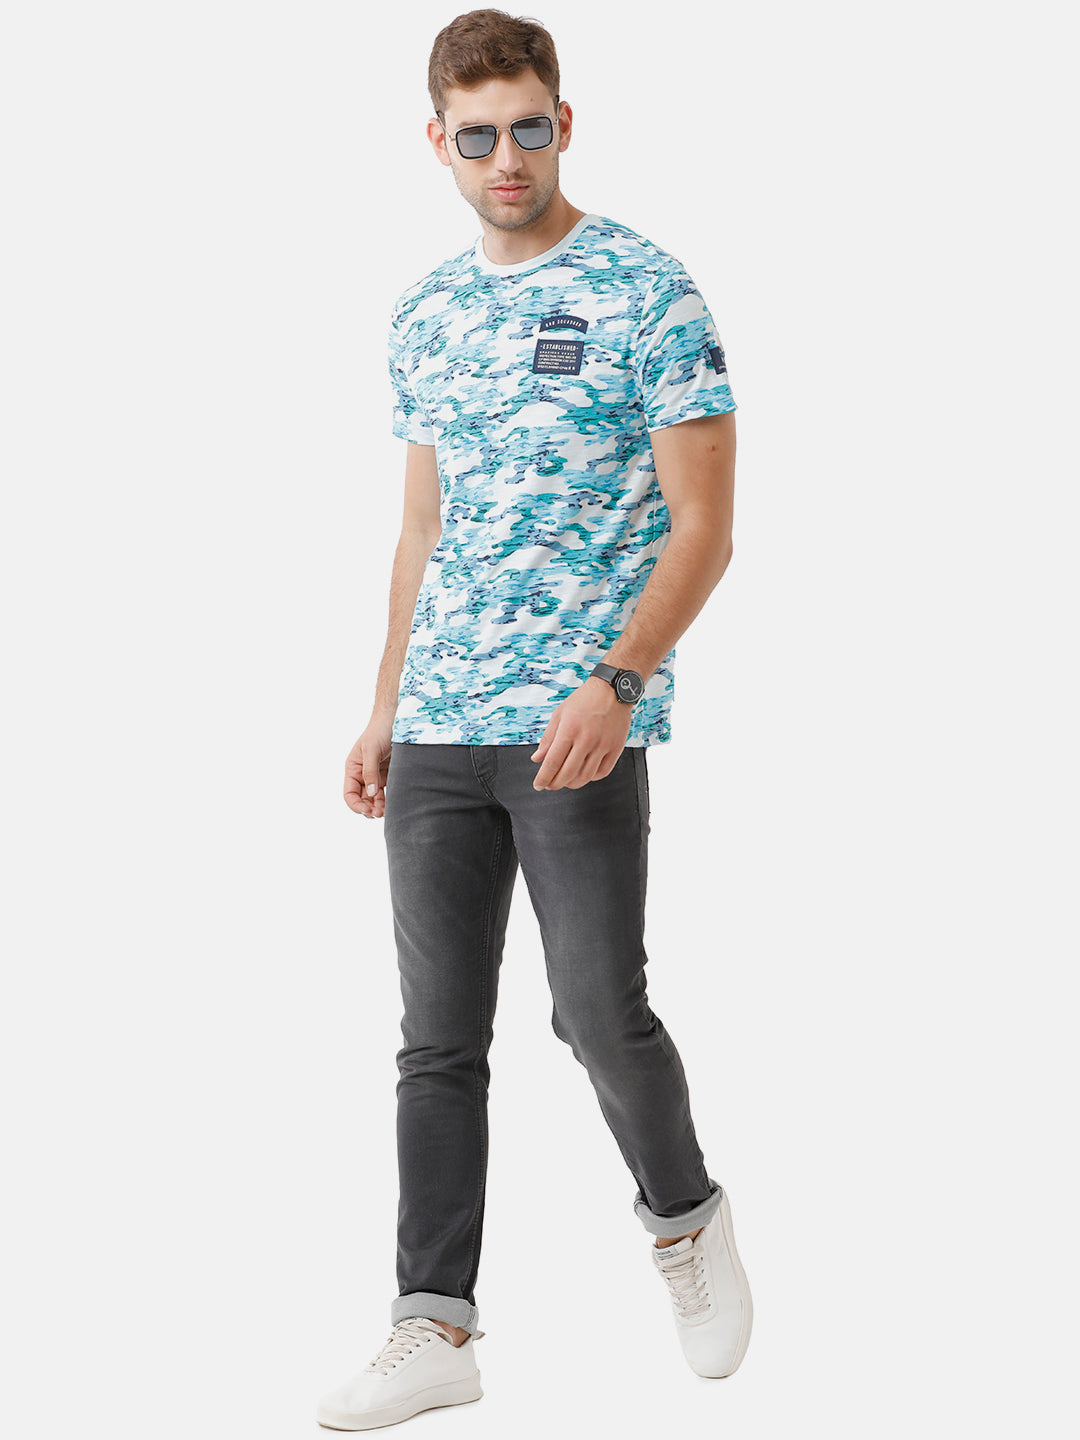 CP BRO Men's Cotton Printed Half Sleeve Slim Fit Round Neck Multicolor T-Shirt | Brcn 466 B